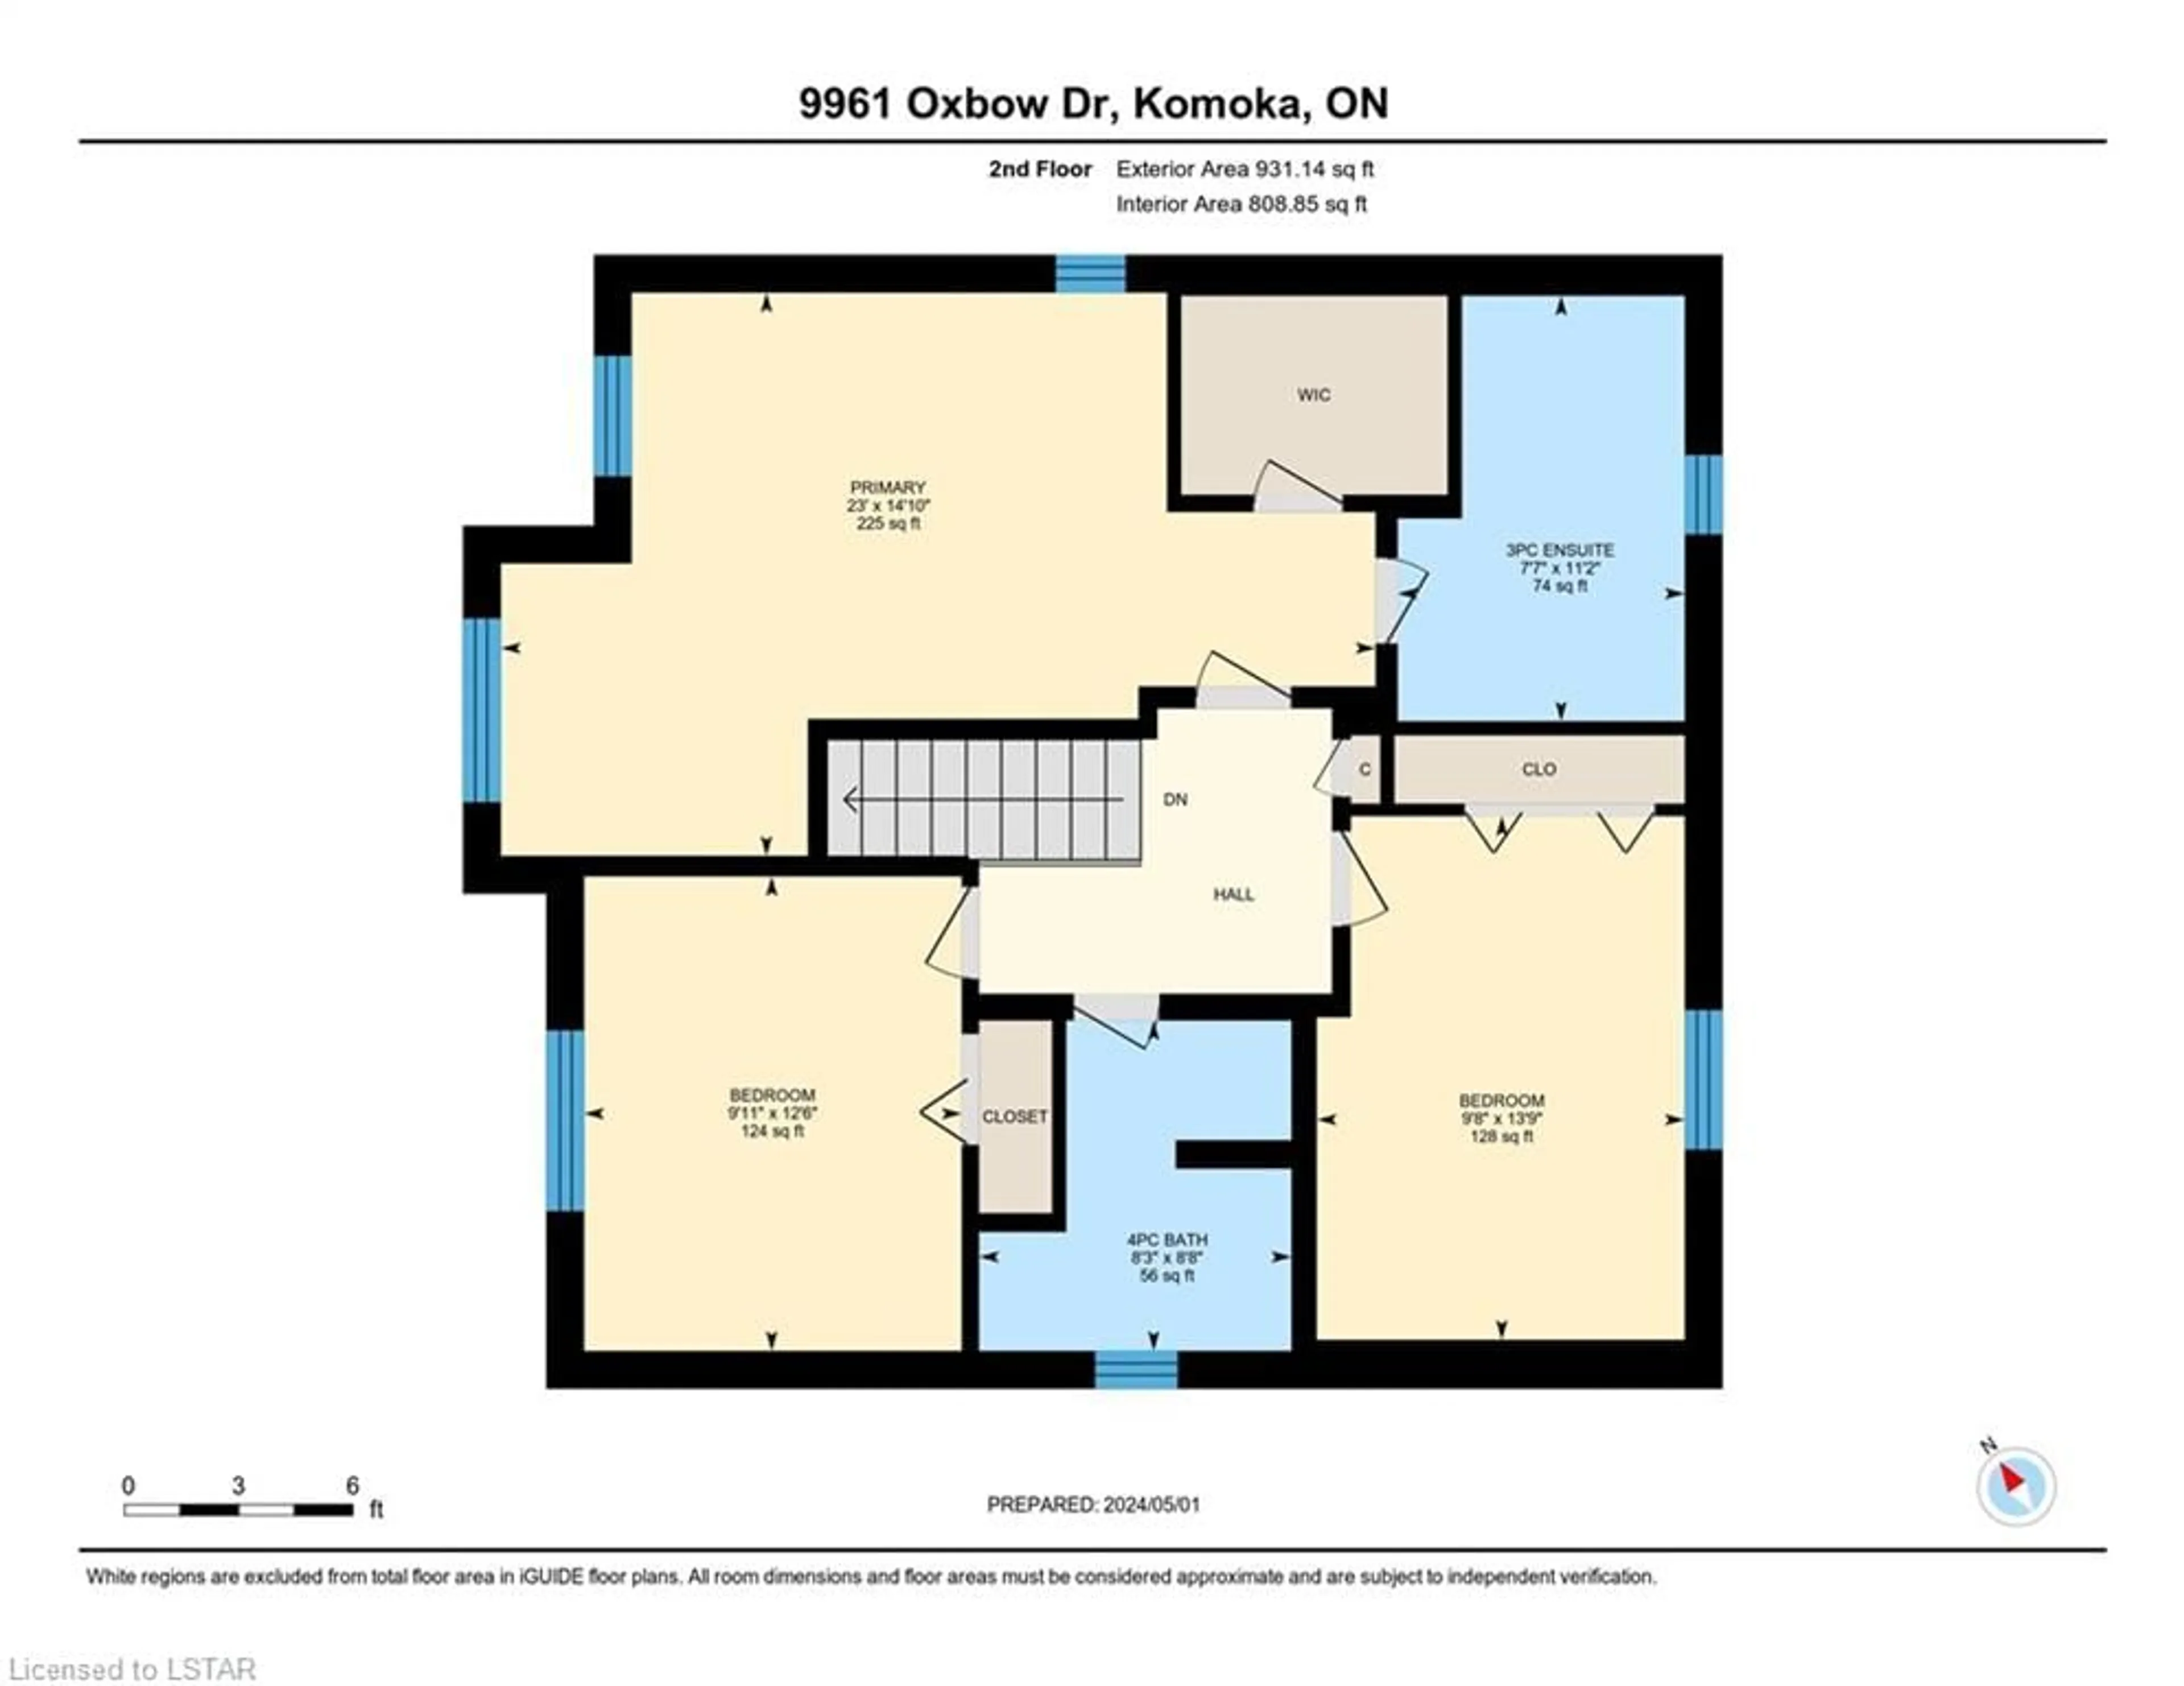 Floor plan for 9961 Oxbow Dr, Komoka Ontario N0L 1R0